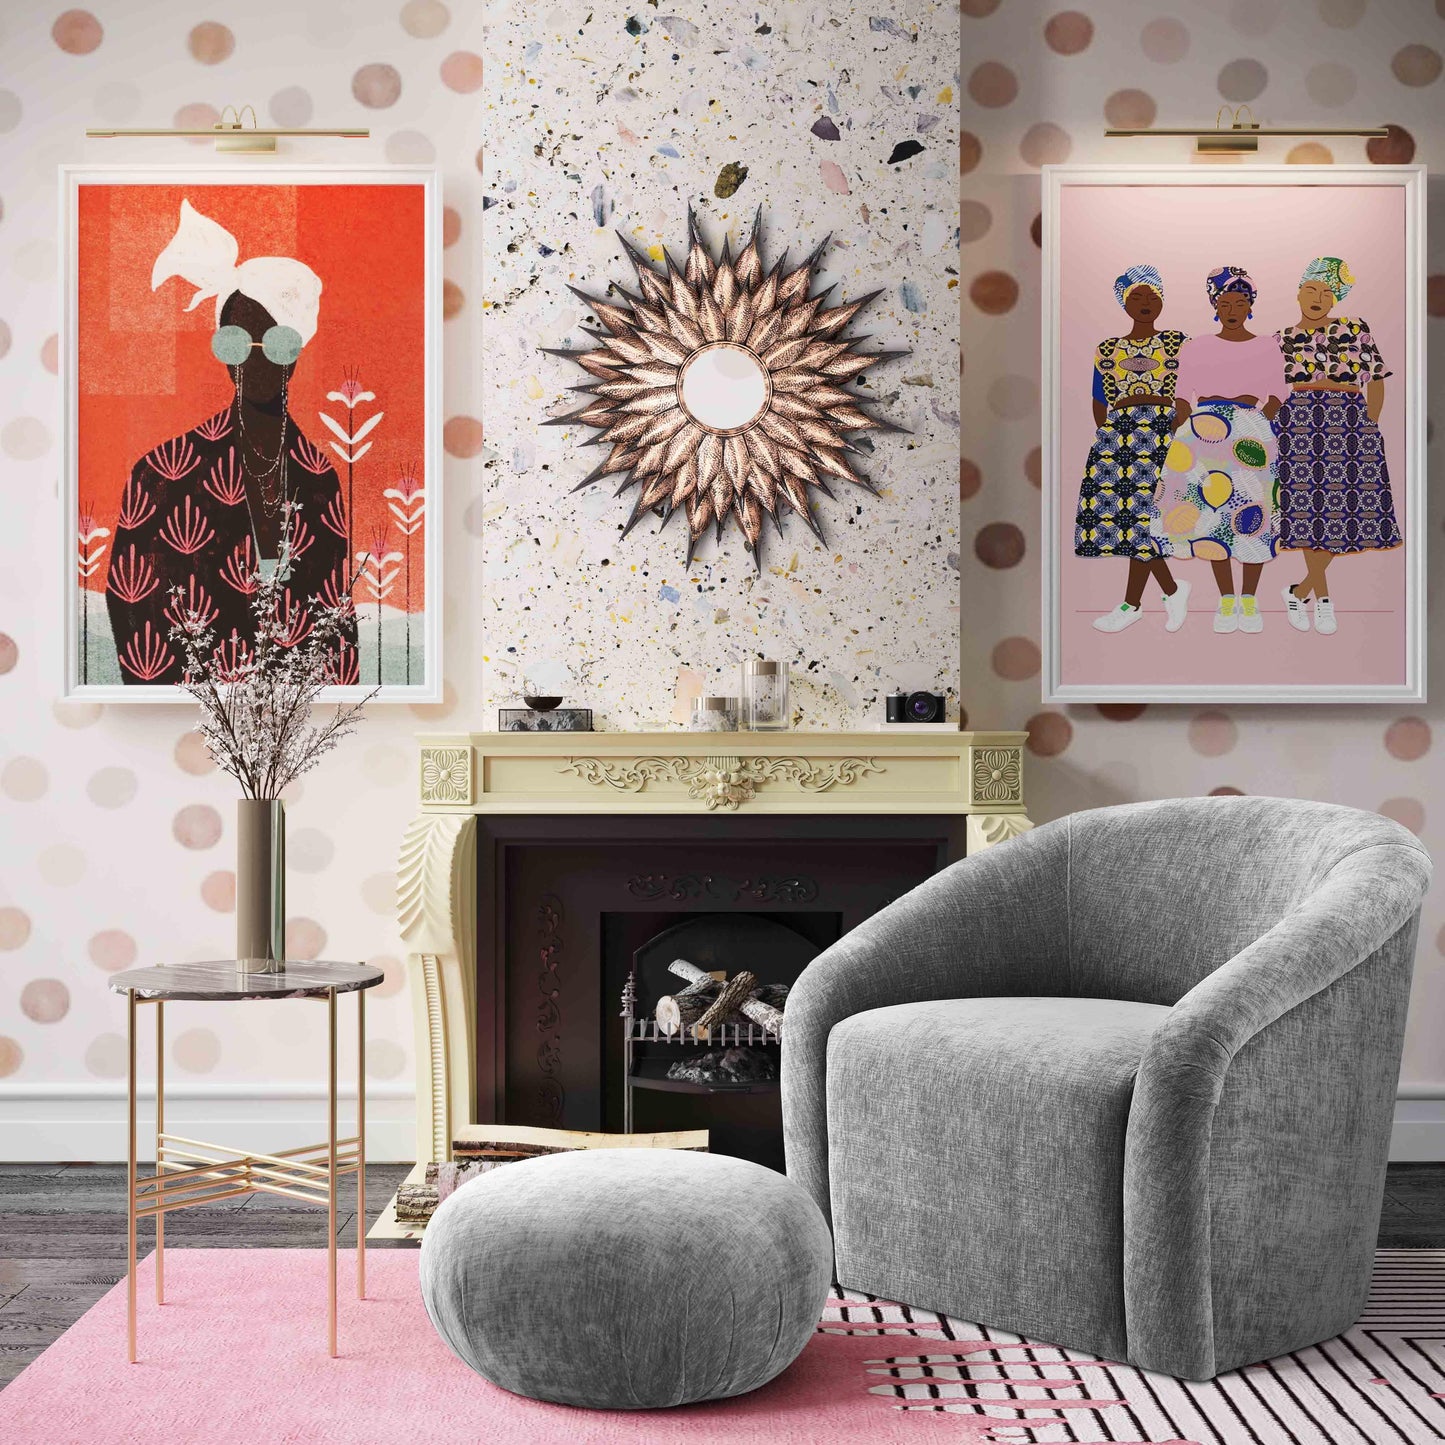 Tov Furniture Boboli Grey Chenille Chair and Ottoman Set